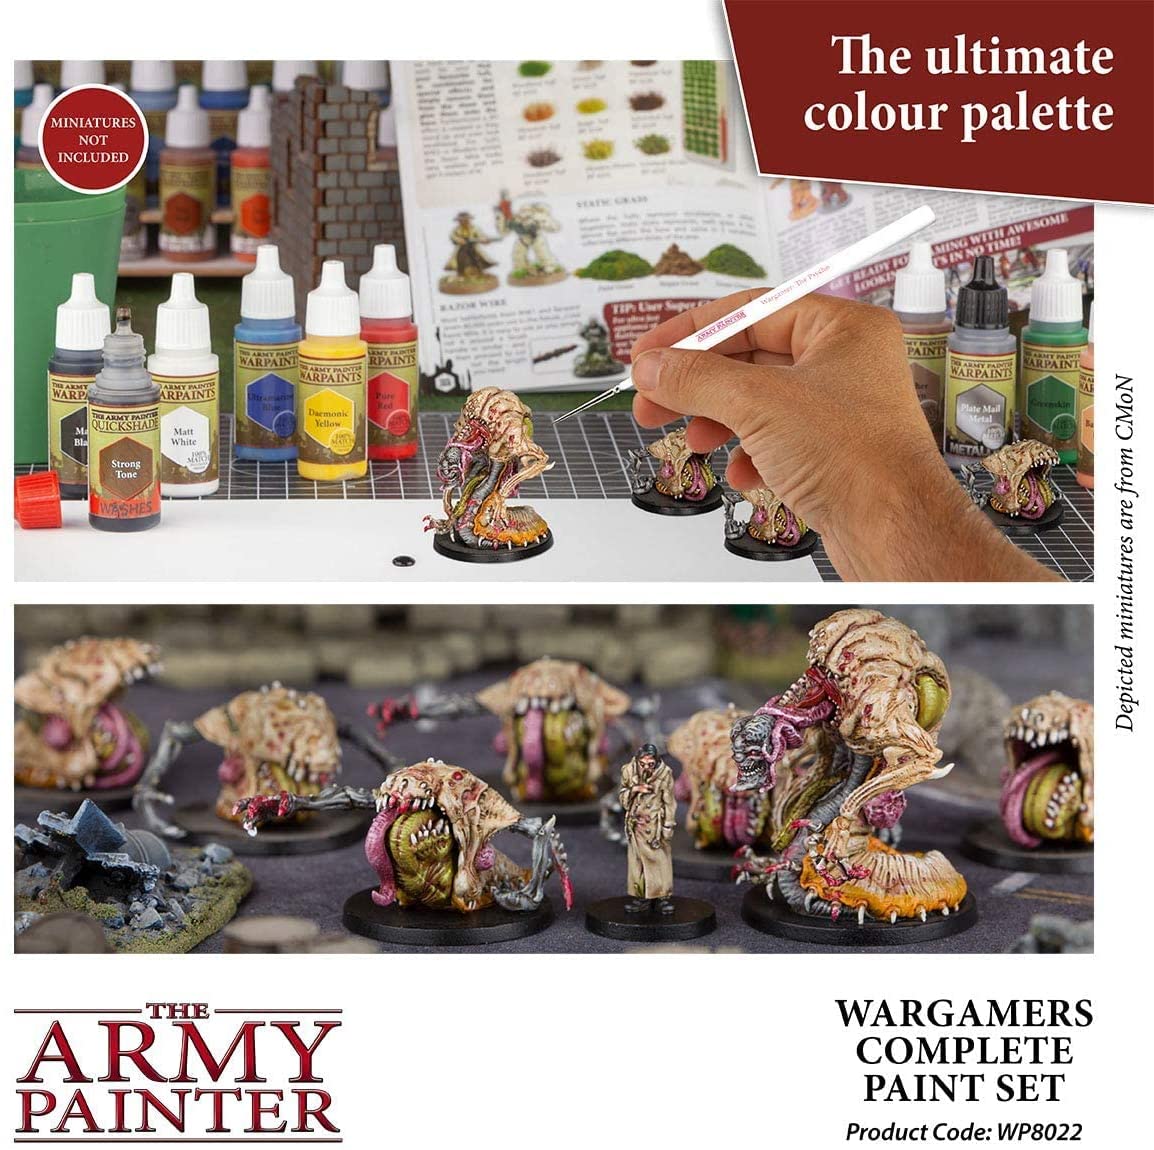 The Army Painter. Wargamers Complete Paint Set details